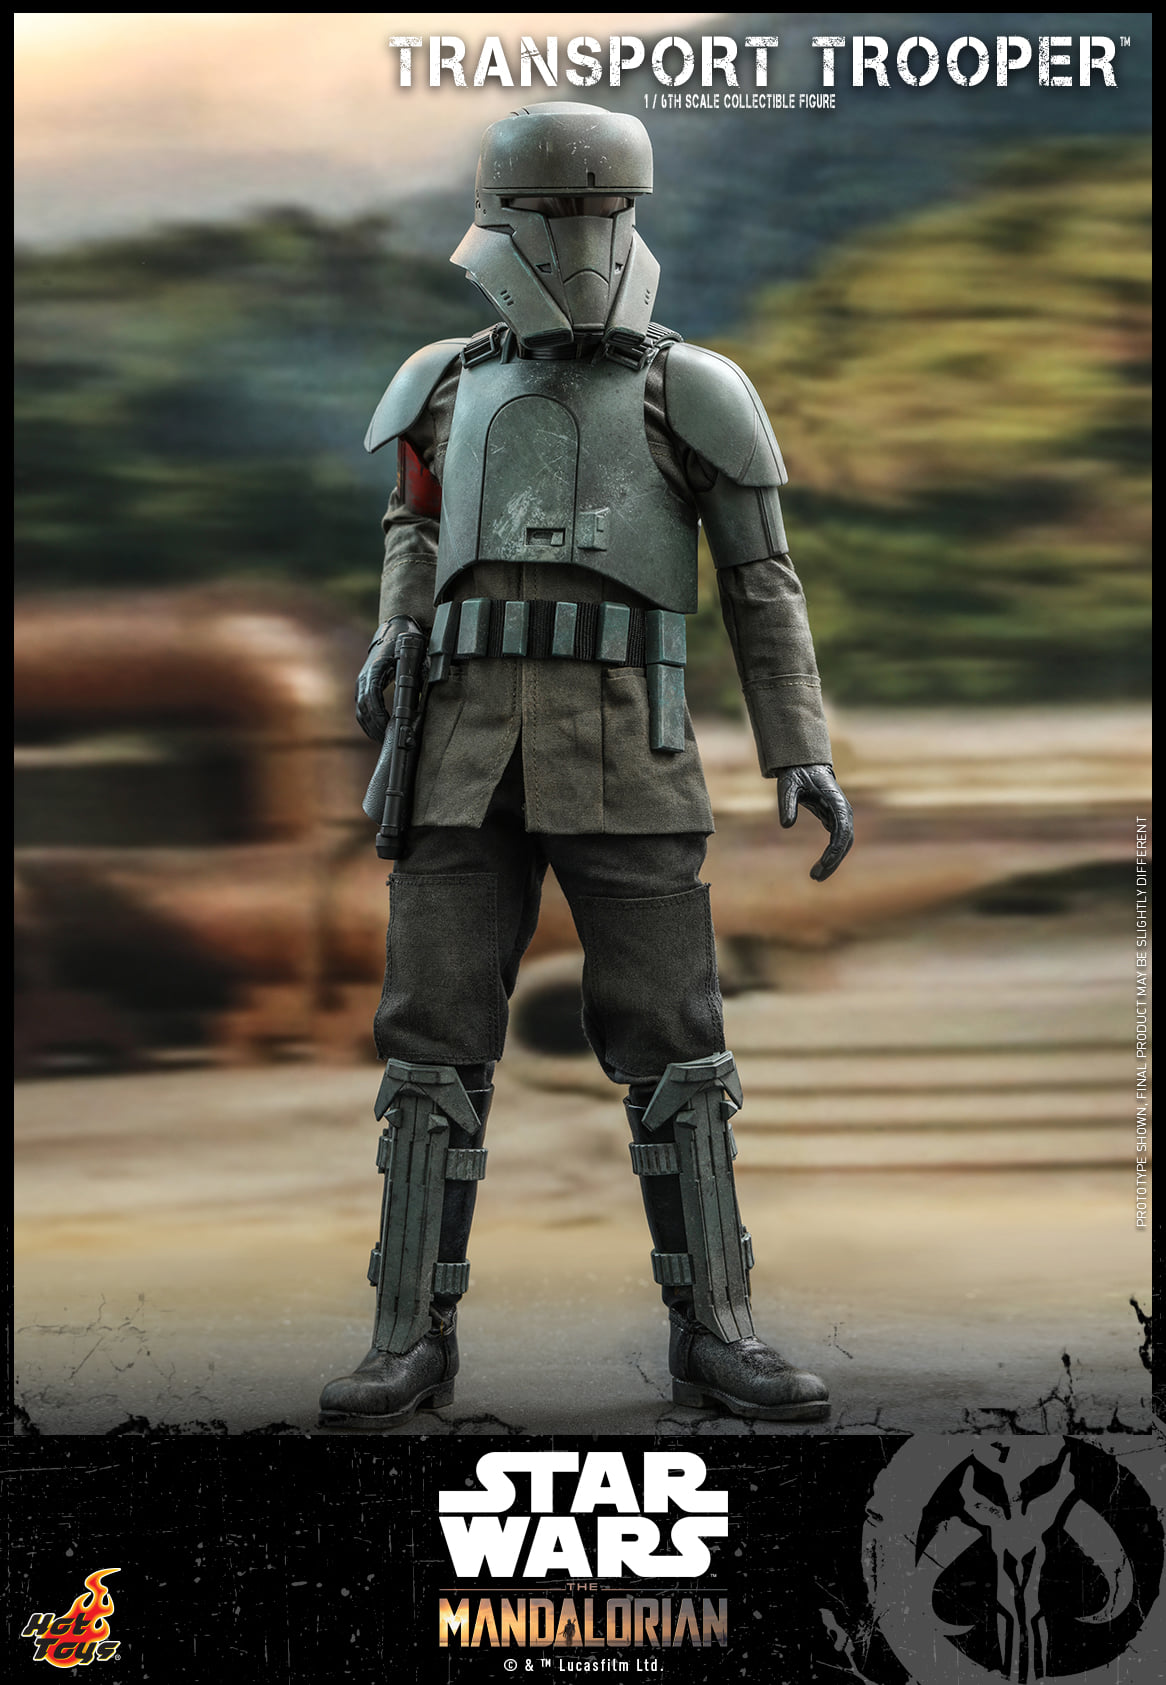 Hot Toys Star Wars Mandalorian Transport Trooper Sixth Scale Figure